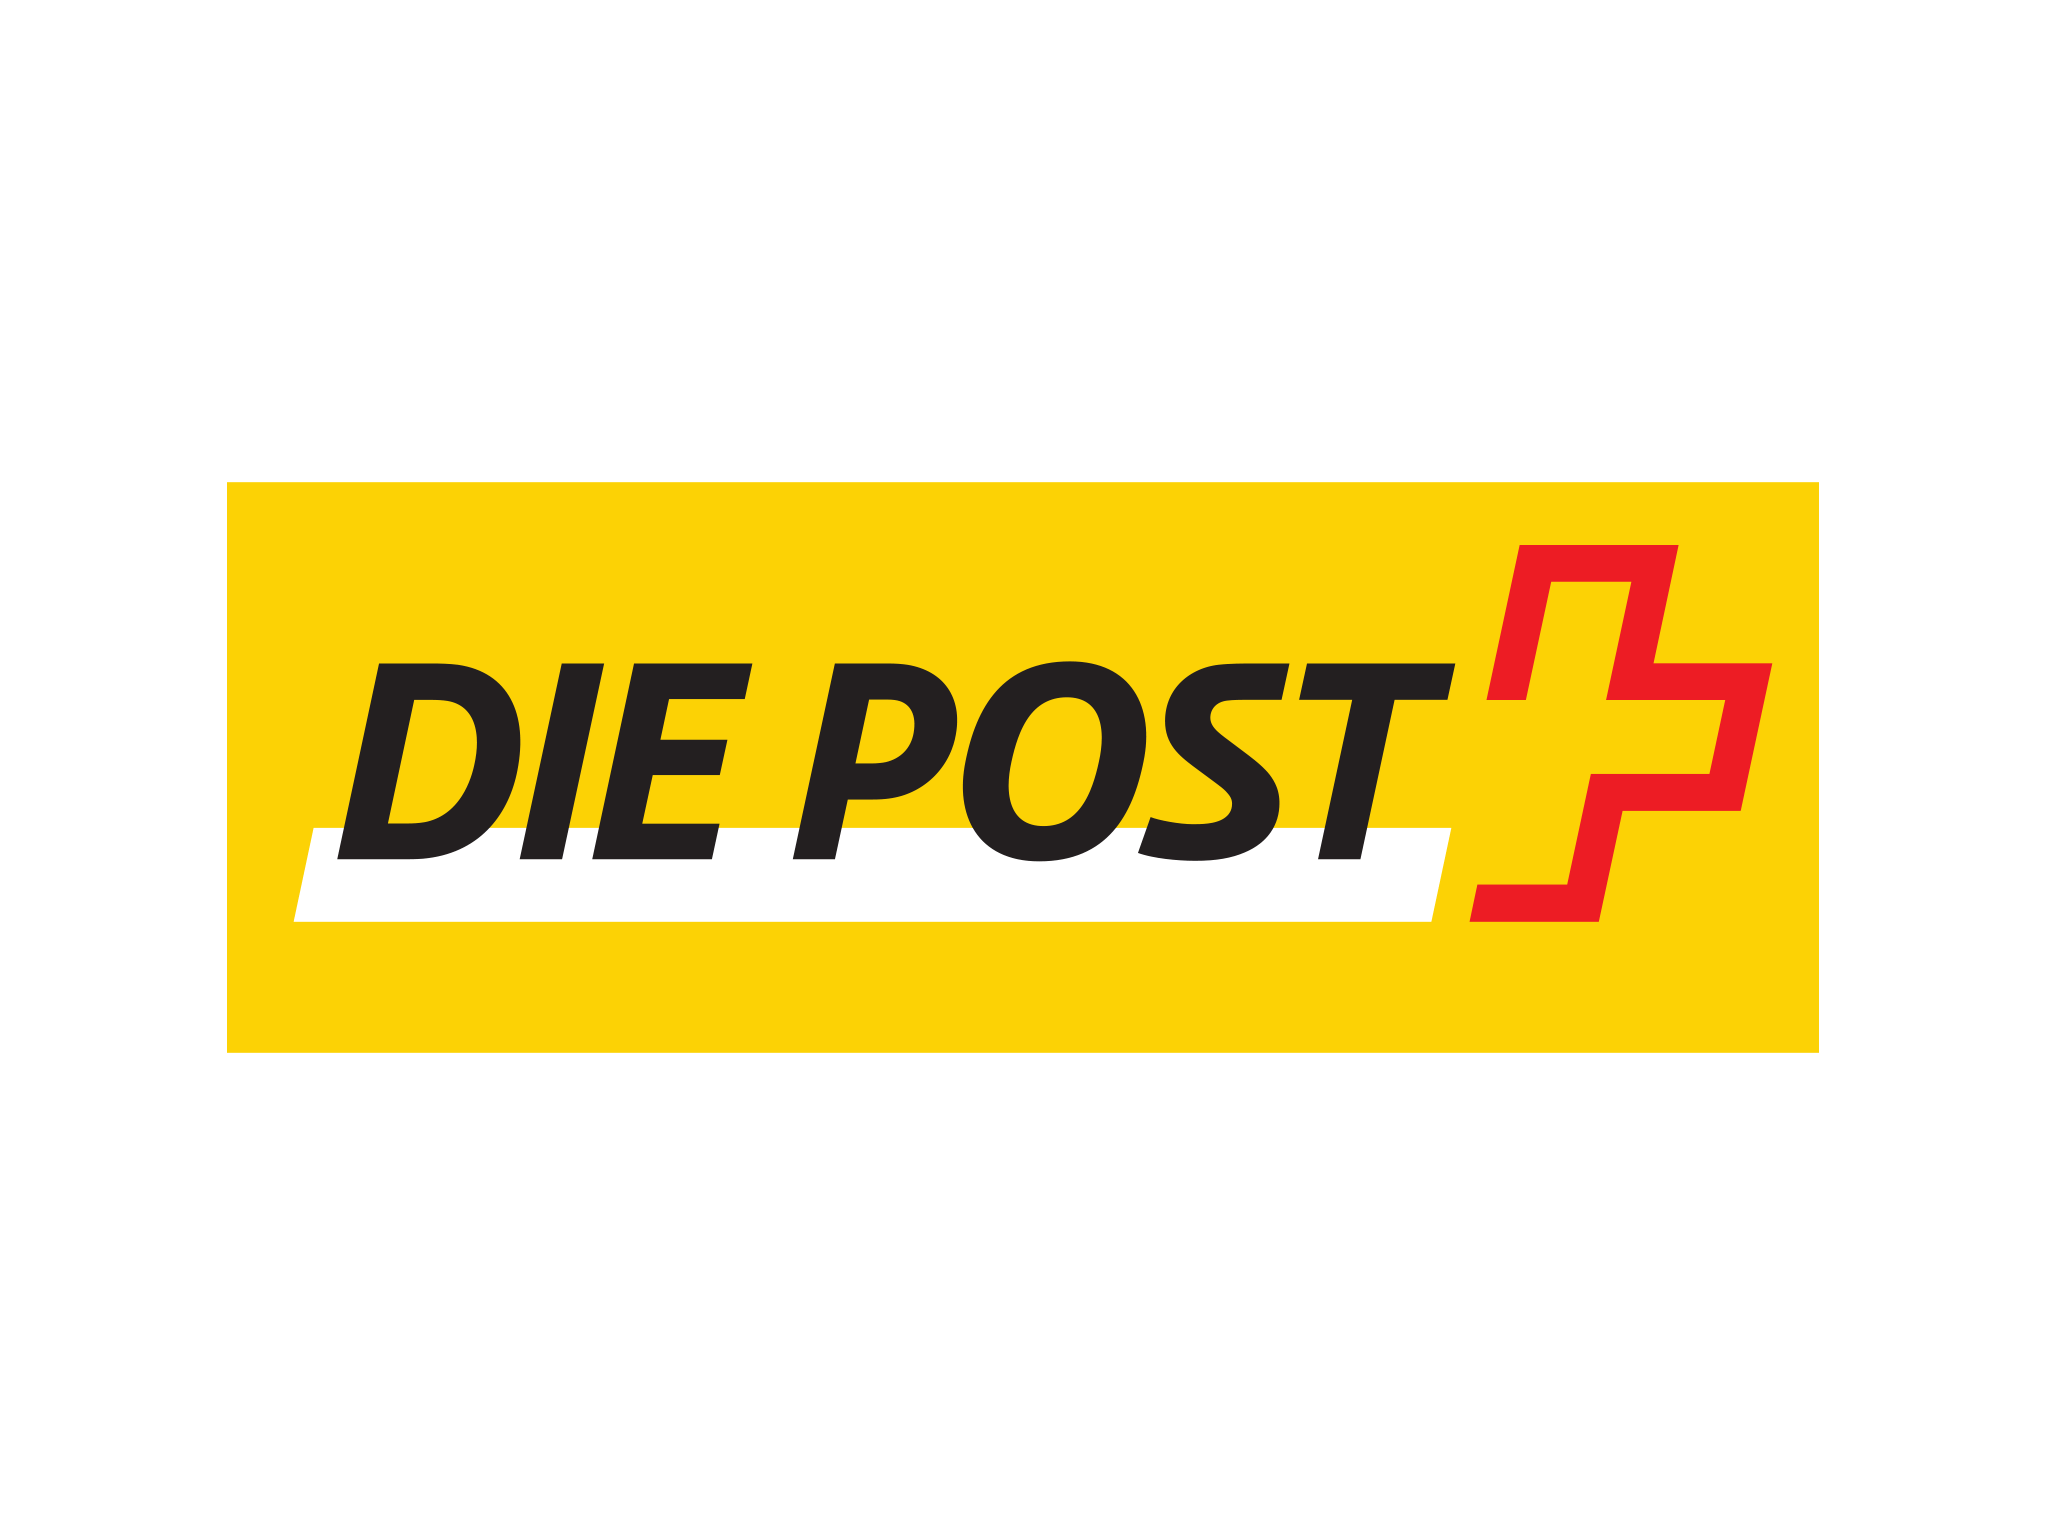 Пост post. Post Ch. Post logo. Post.Ch logo. Die Post картинки.